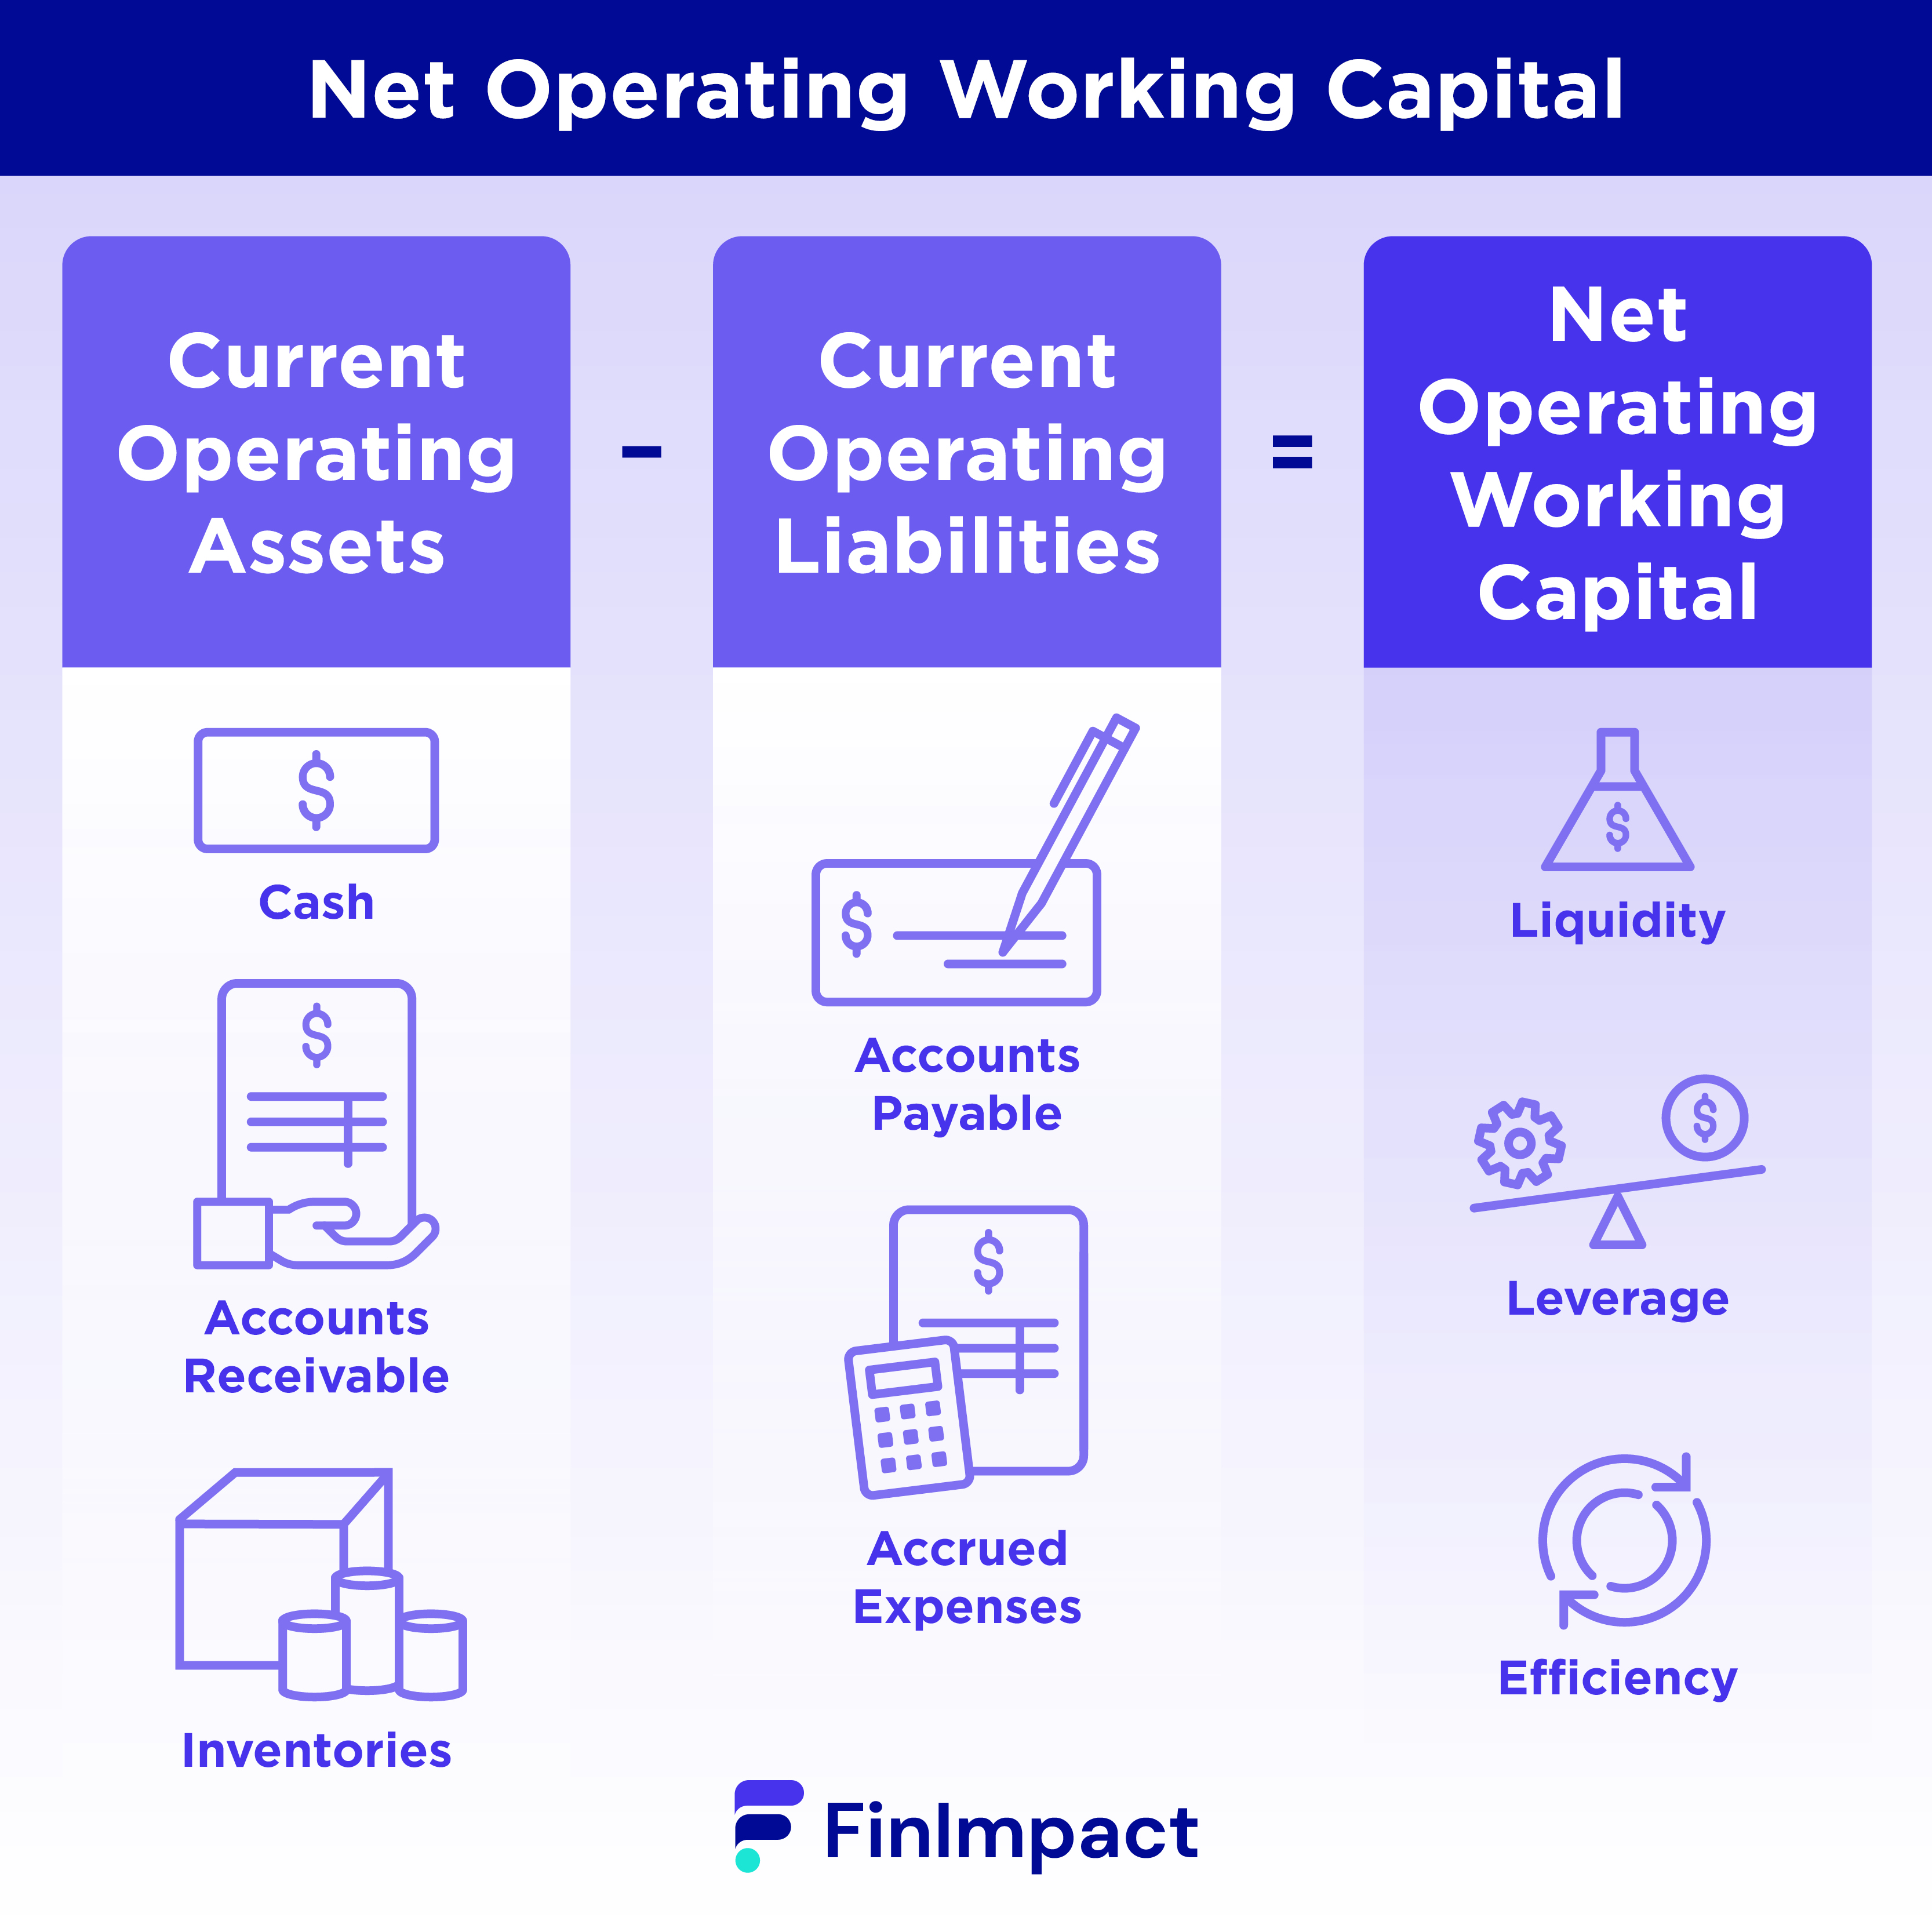 Net Operating Working Capital